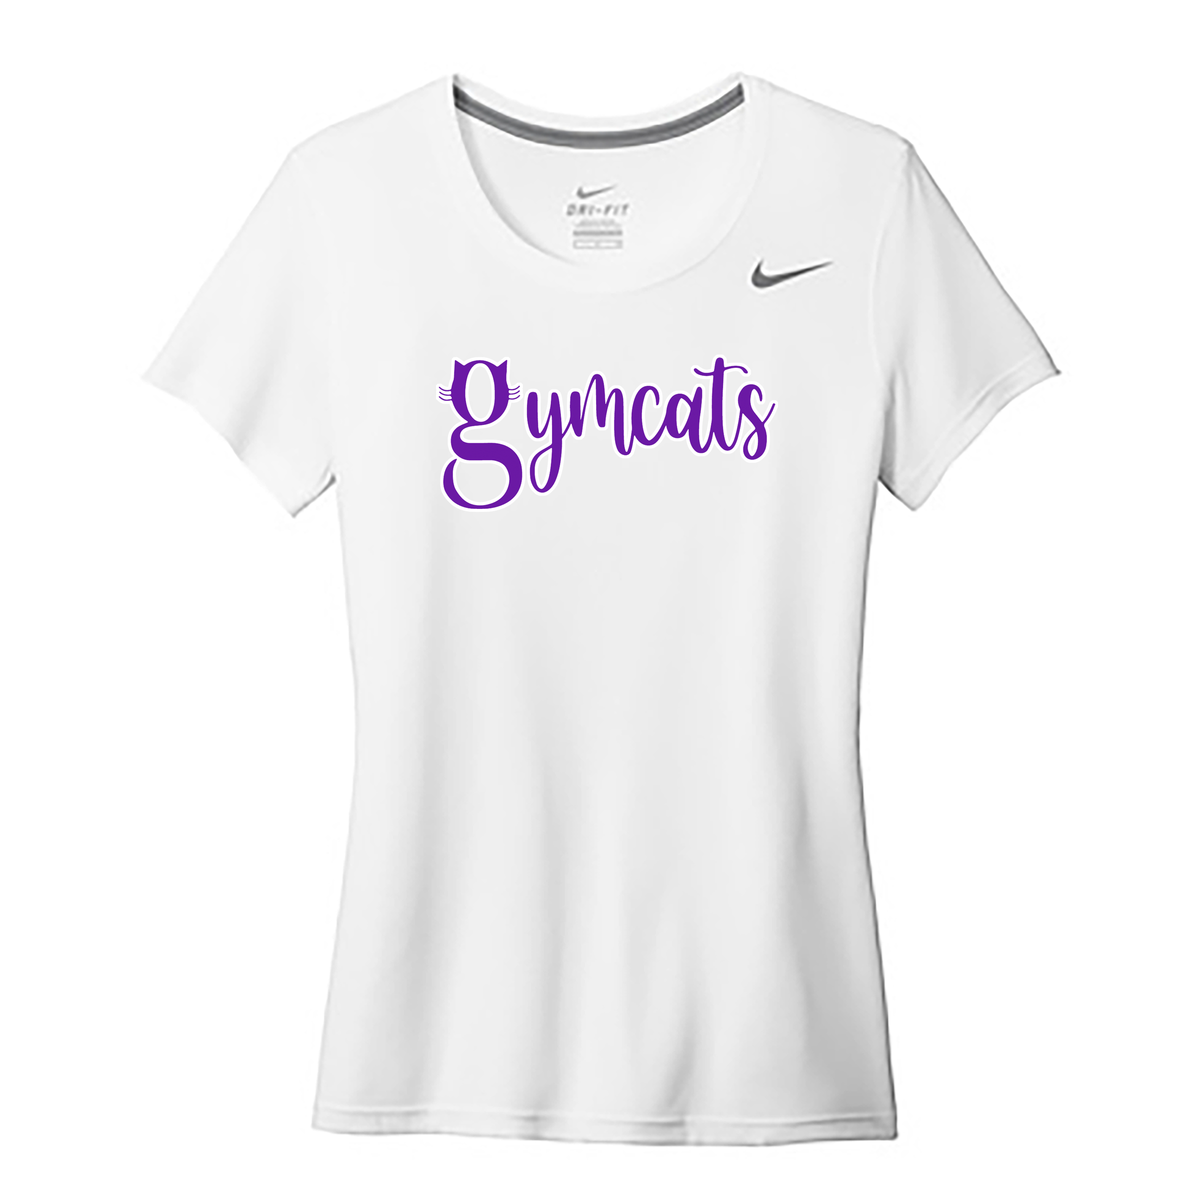 Gymcats Gymnastics Nike Ladies Legend Tee